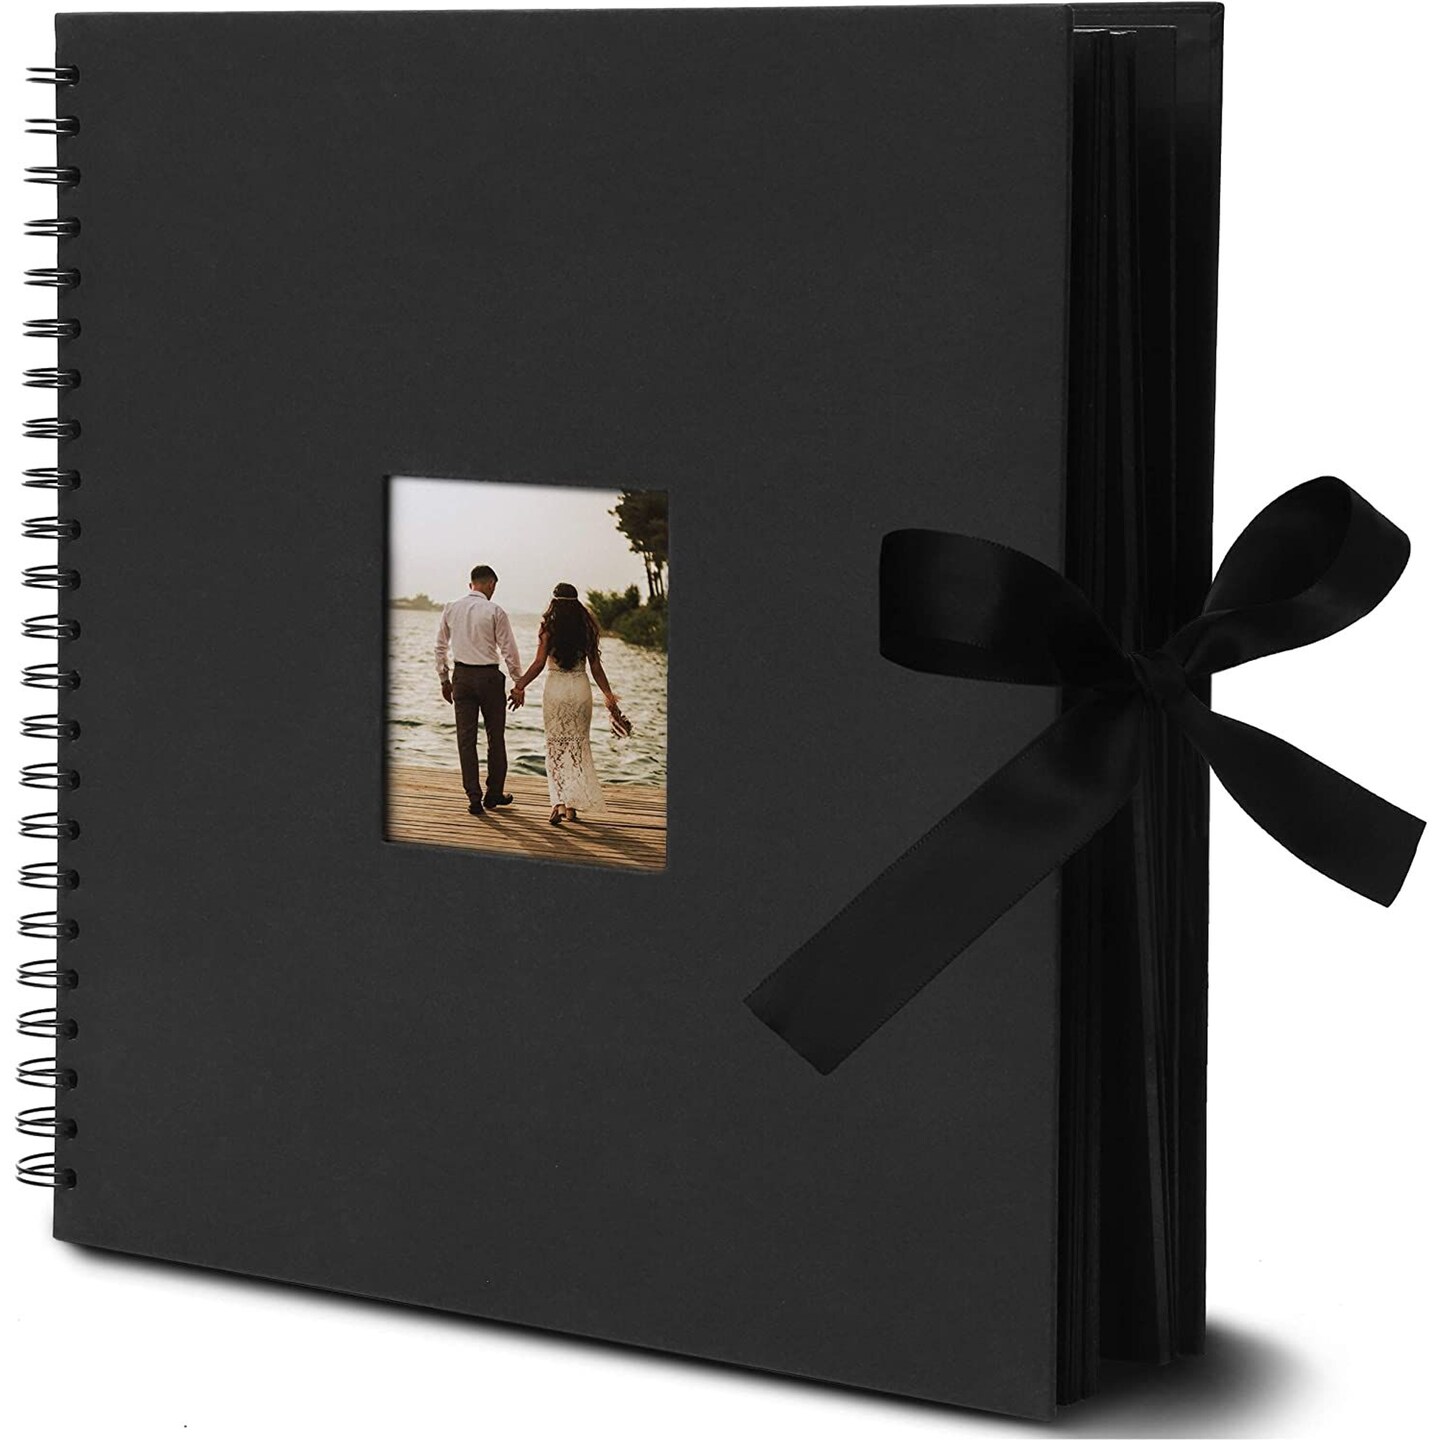 12 x 12 Black Leather Scrapbook Album by Park Lane